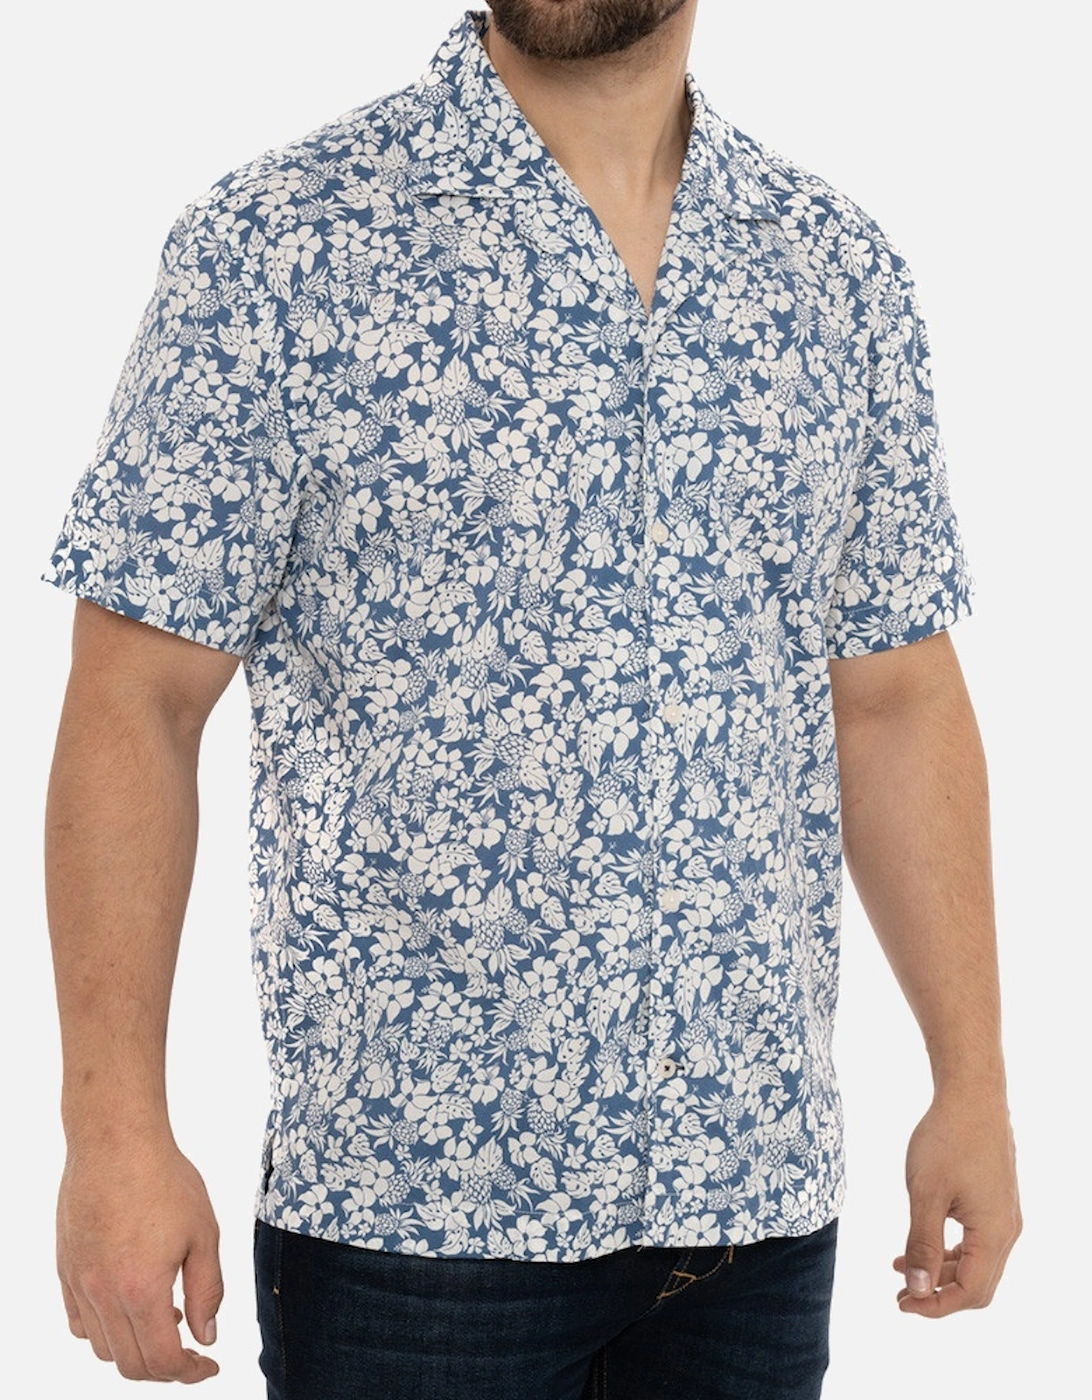 Joop Mens Hanes S/S Flower Print Shirt (Blue)